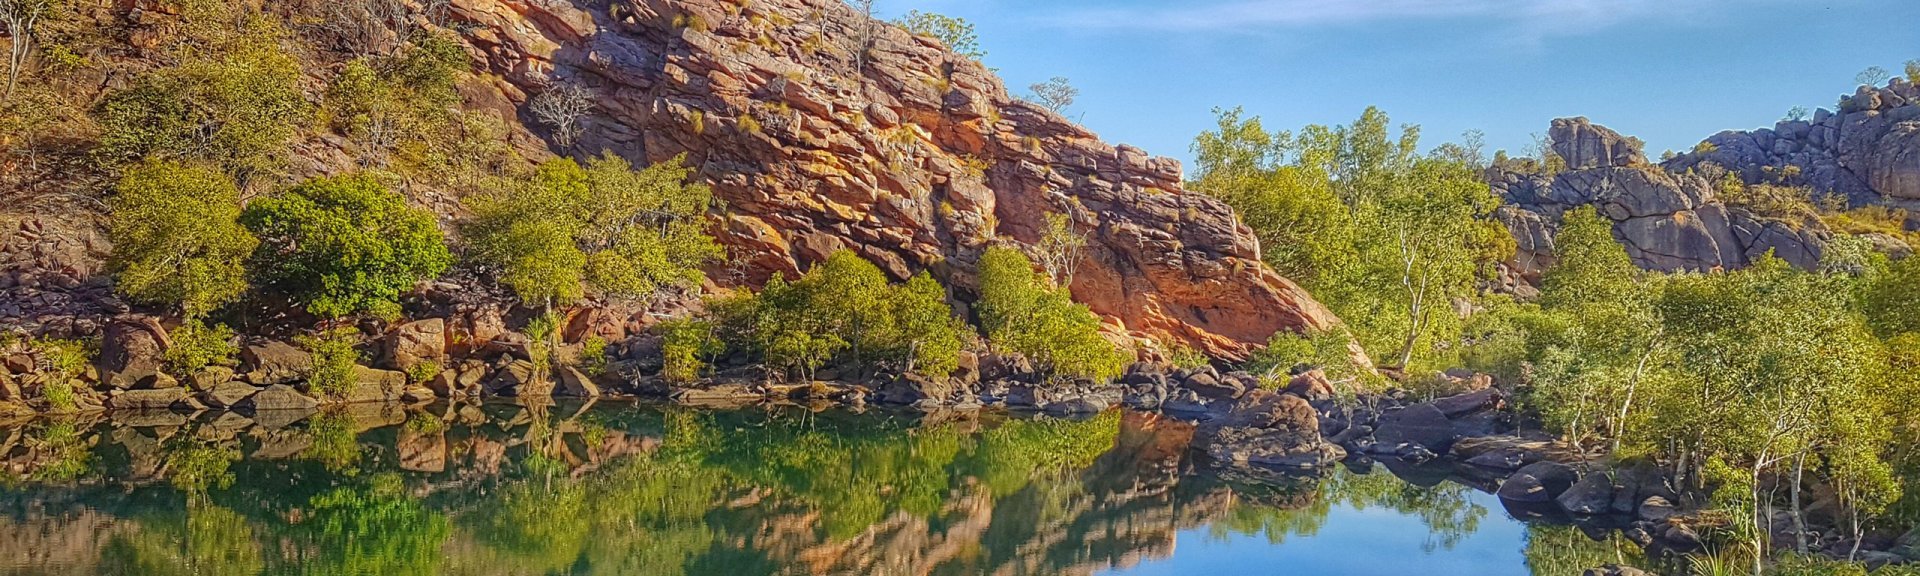  Koolpin Gorge in Kakadu National Park Australia - Credit Parks Australia